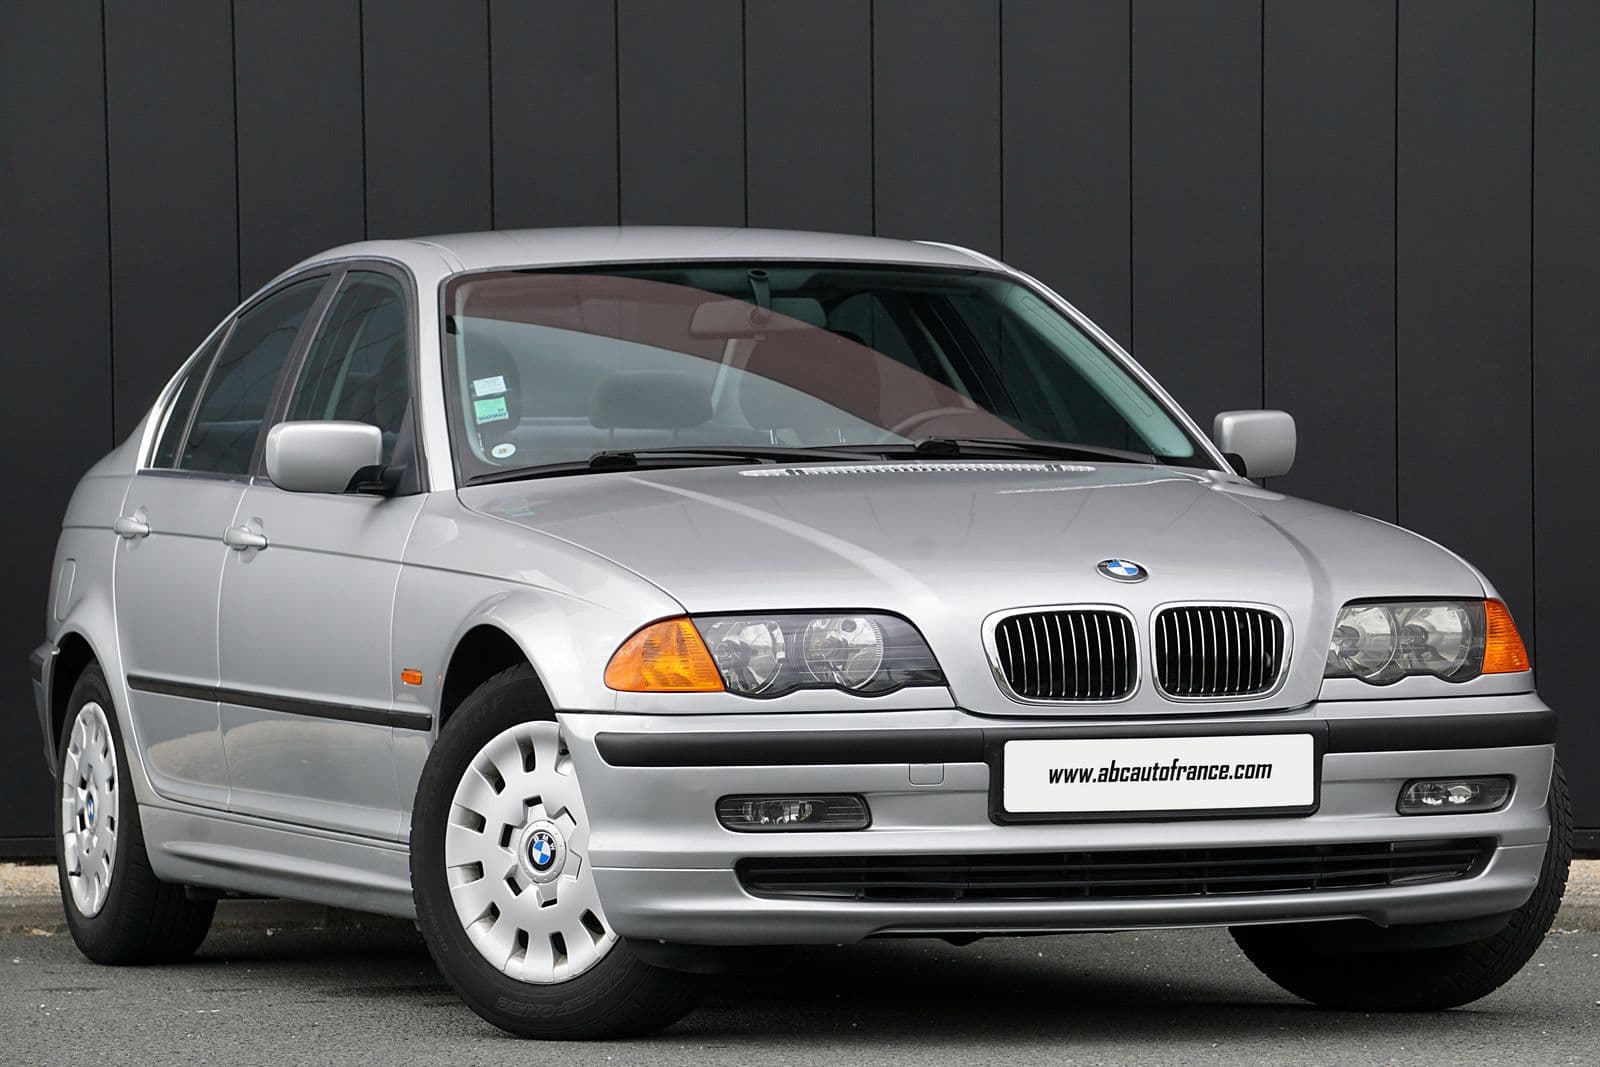 BMW 320i (E46) 2.0 150 Cv état collection Occasion 79 abcautofrance (abc auto france) 4